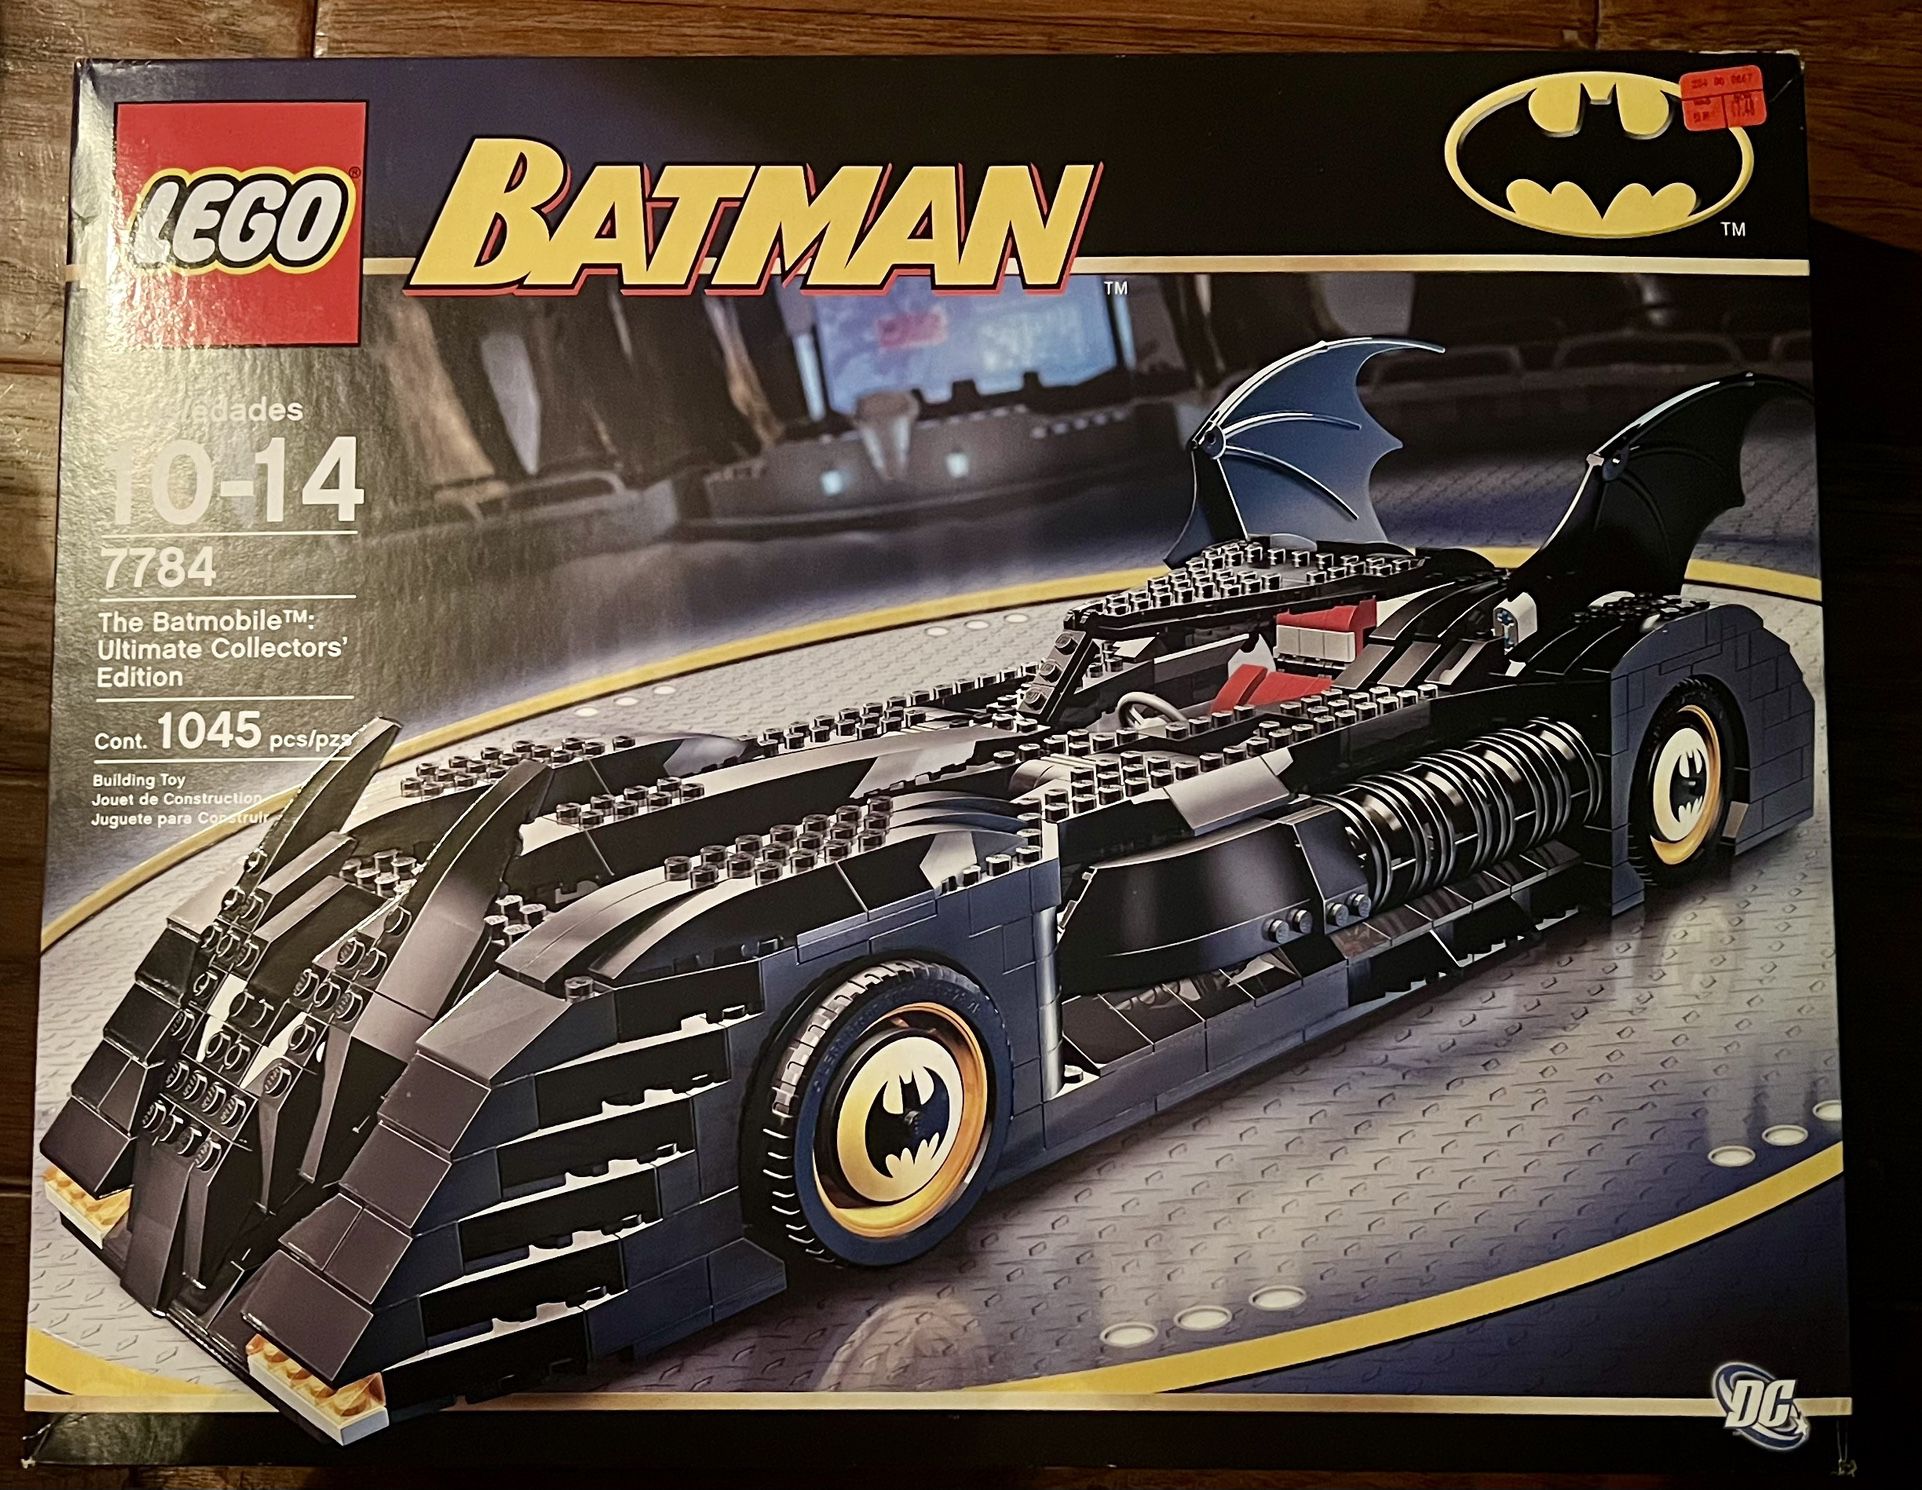 Lego 7784  Batman THE BATMOBILE Ultimate Collector's Edition.